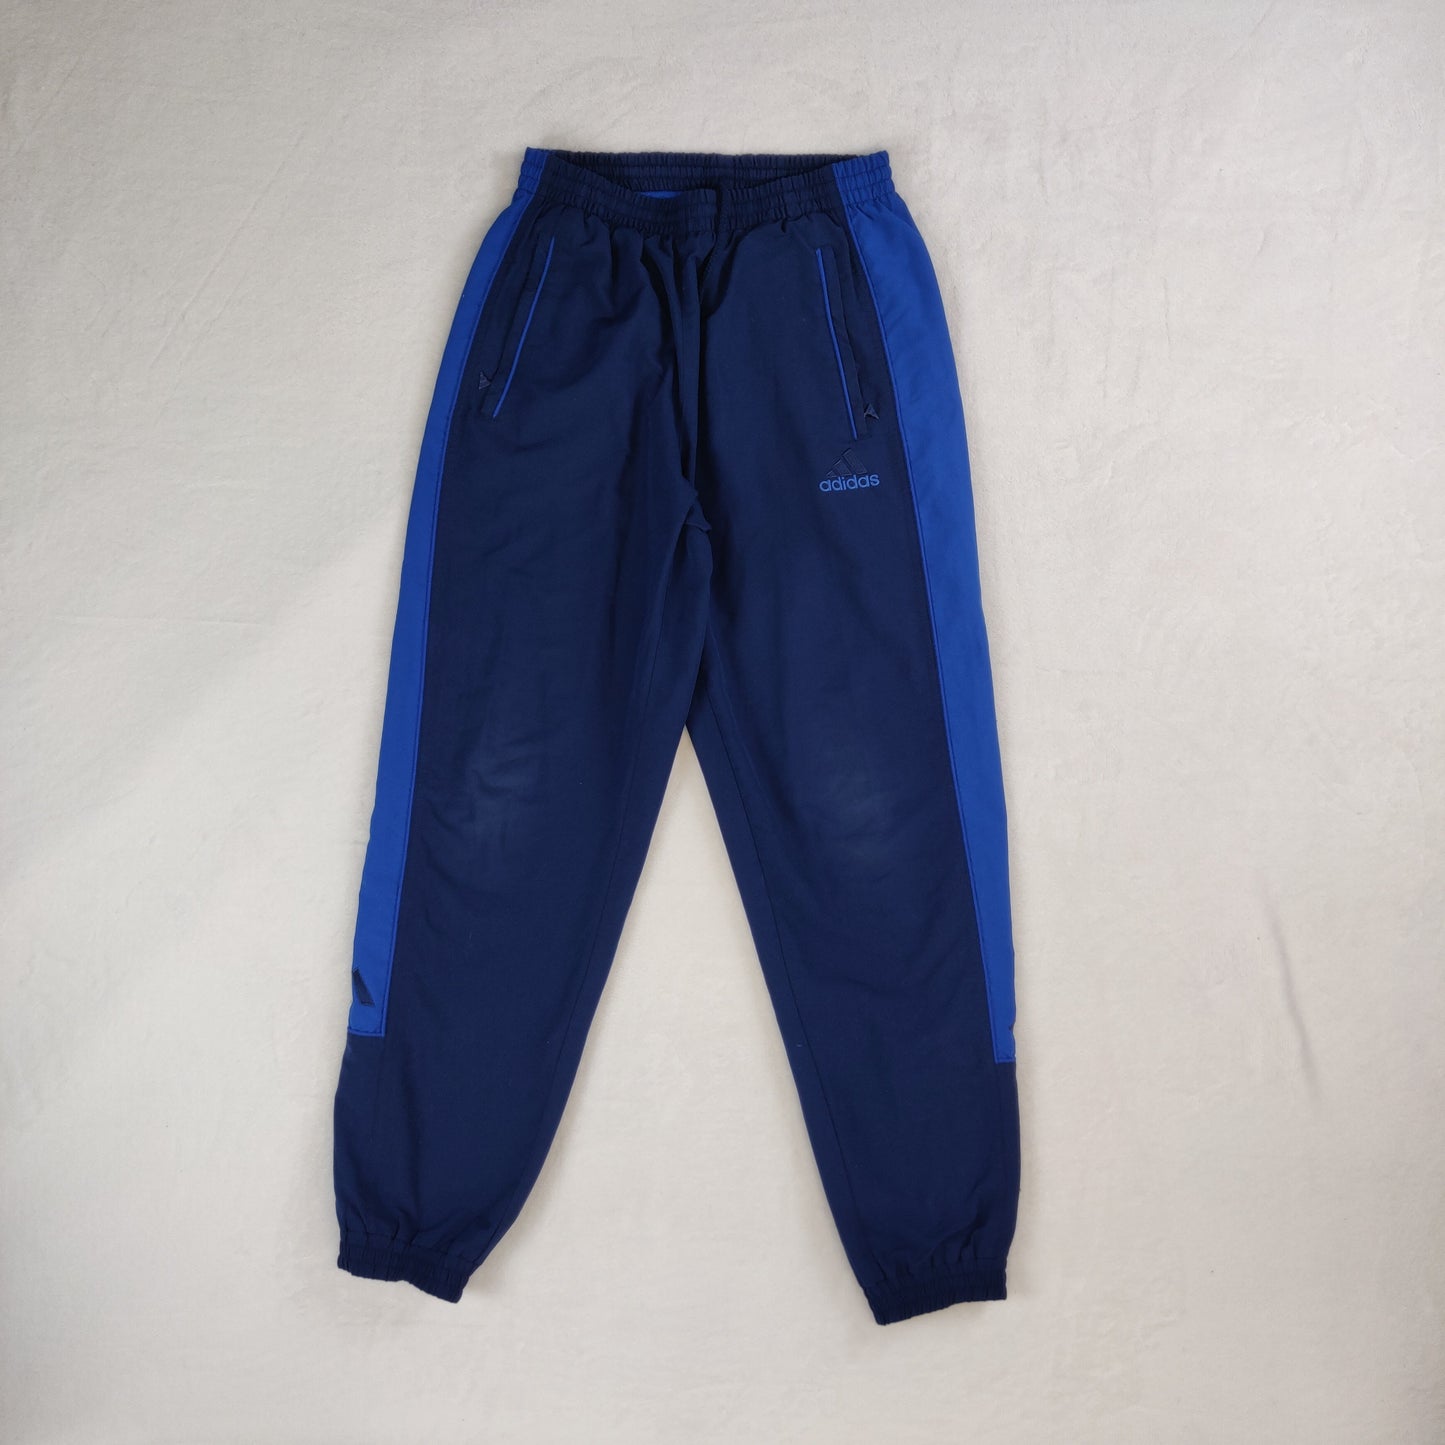 Adidas Vintage 90s Retro Navy Blue Tracksuit Bottoms Track Pants Joggers Men Small